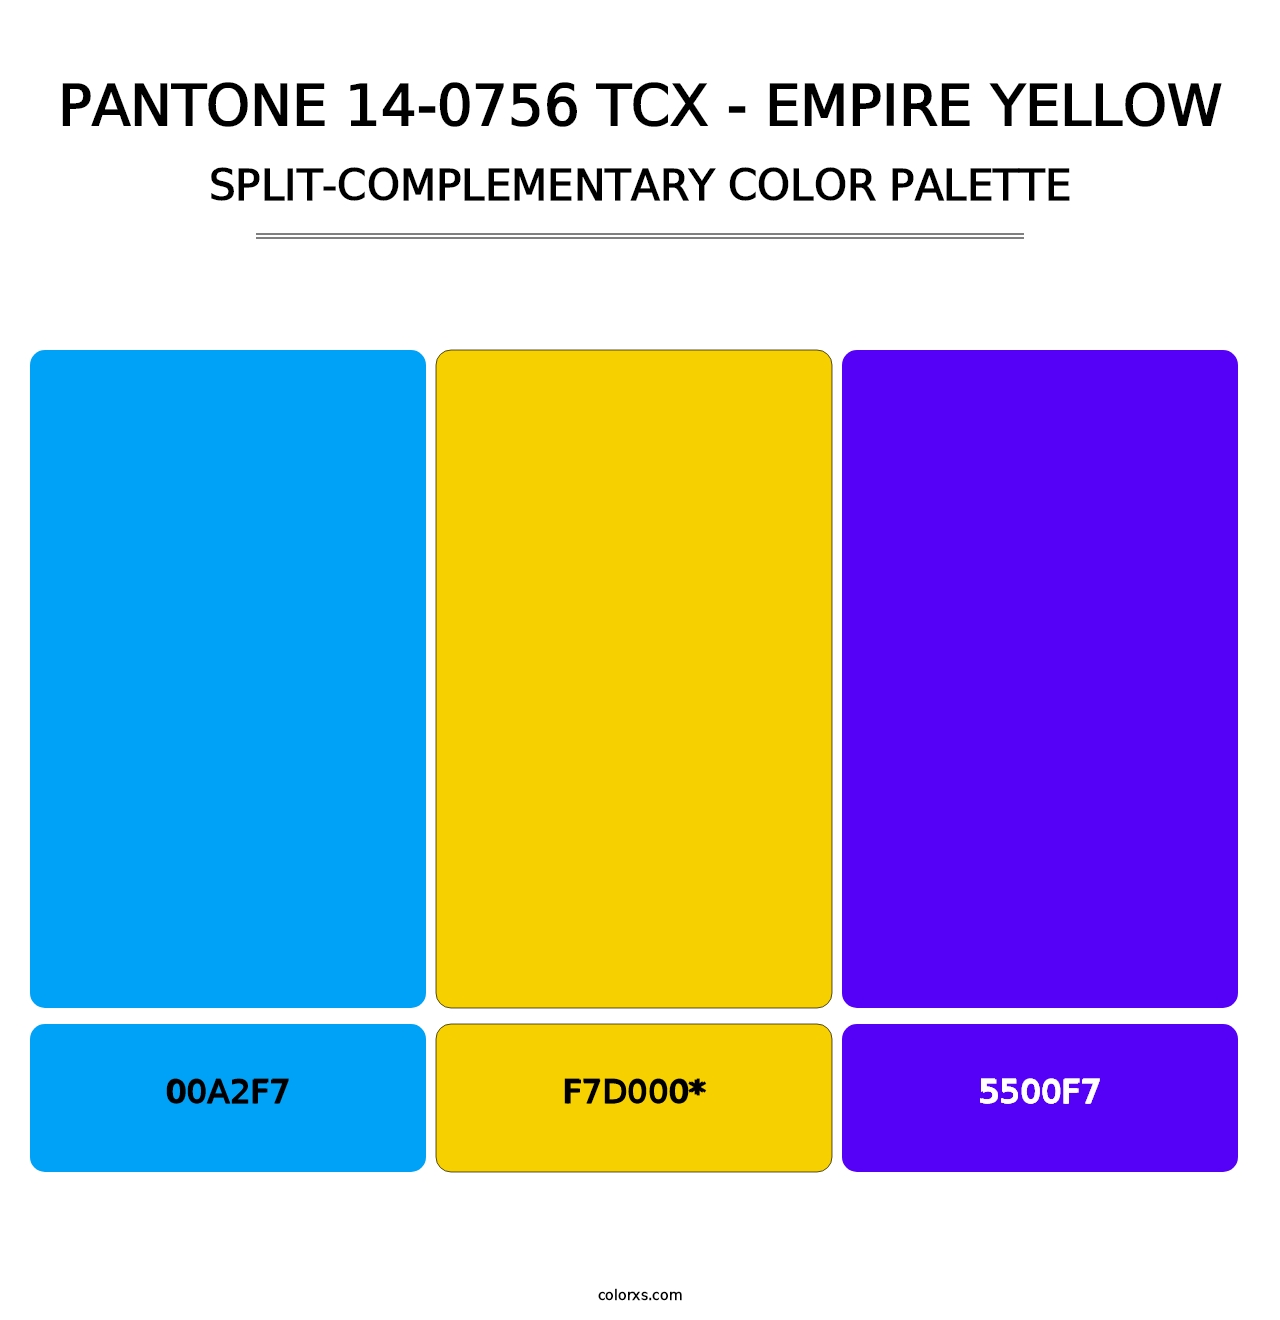 PANTONE 14-0756 TCX - Empire Yellow - Split-Complementary Color Palette